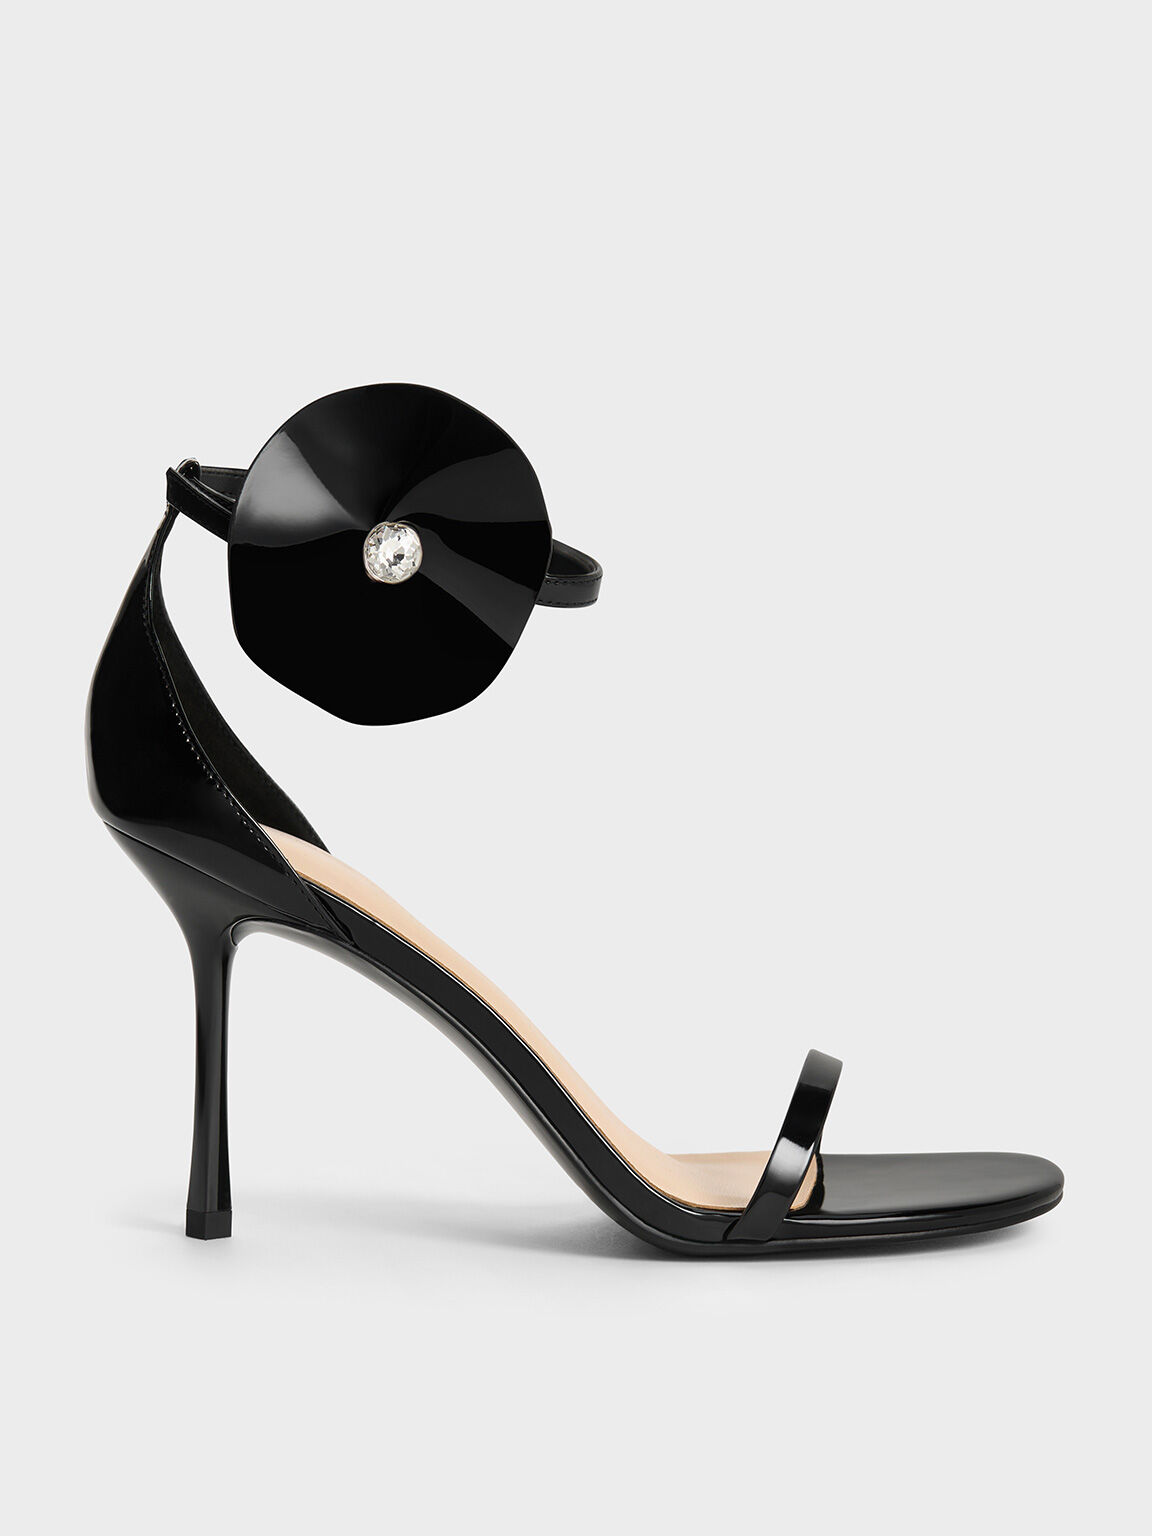 Patent Flower-Accent Stiletto-Heel Sandals, Black Patent, hi-res